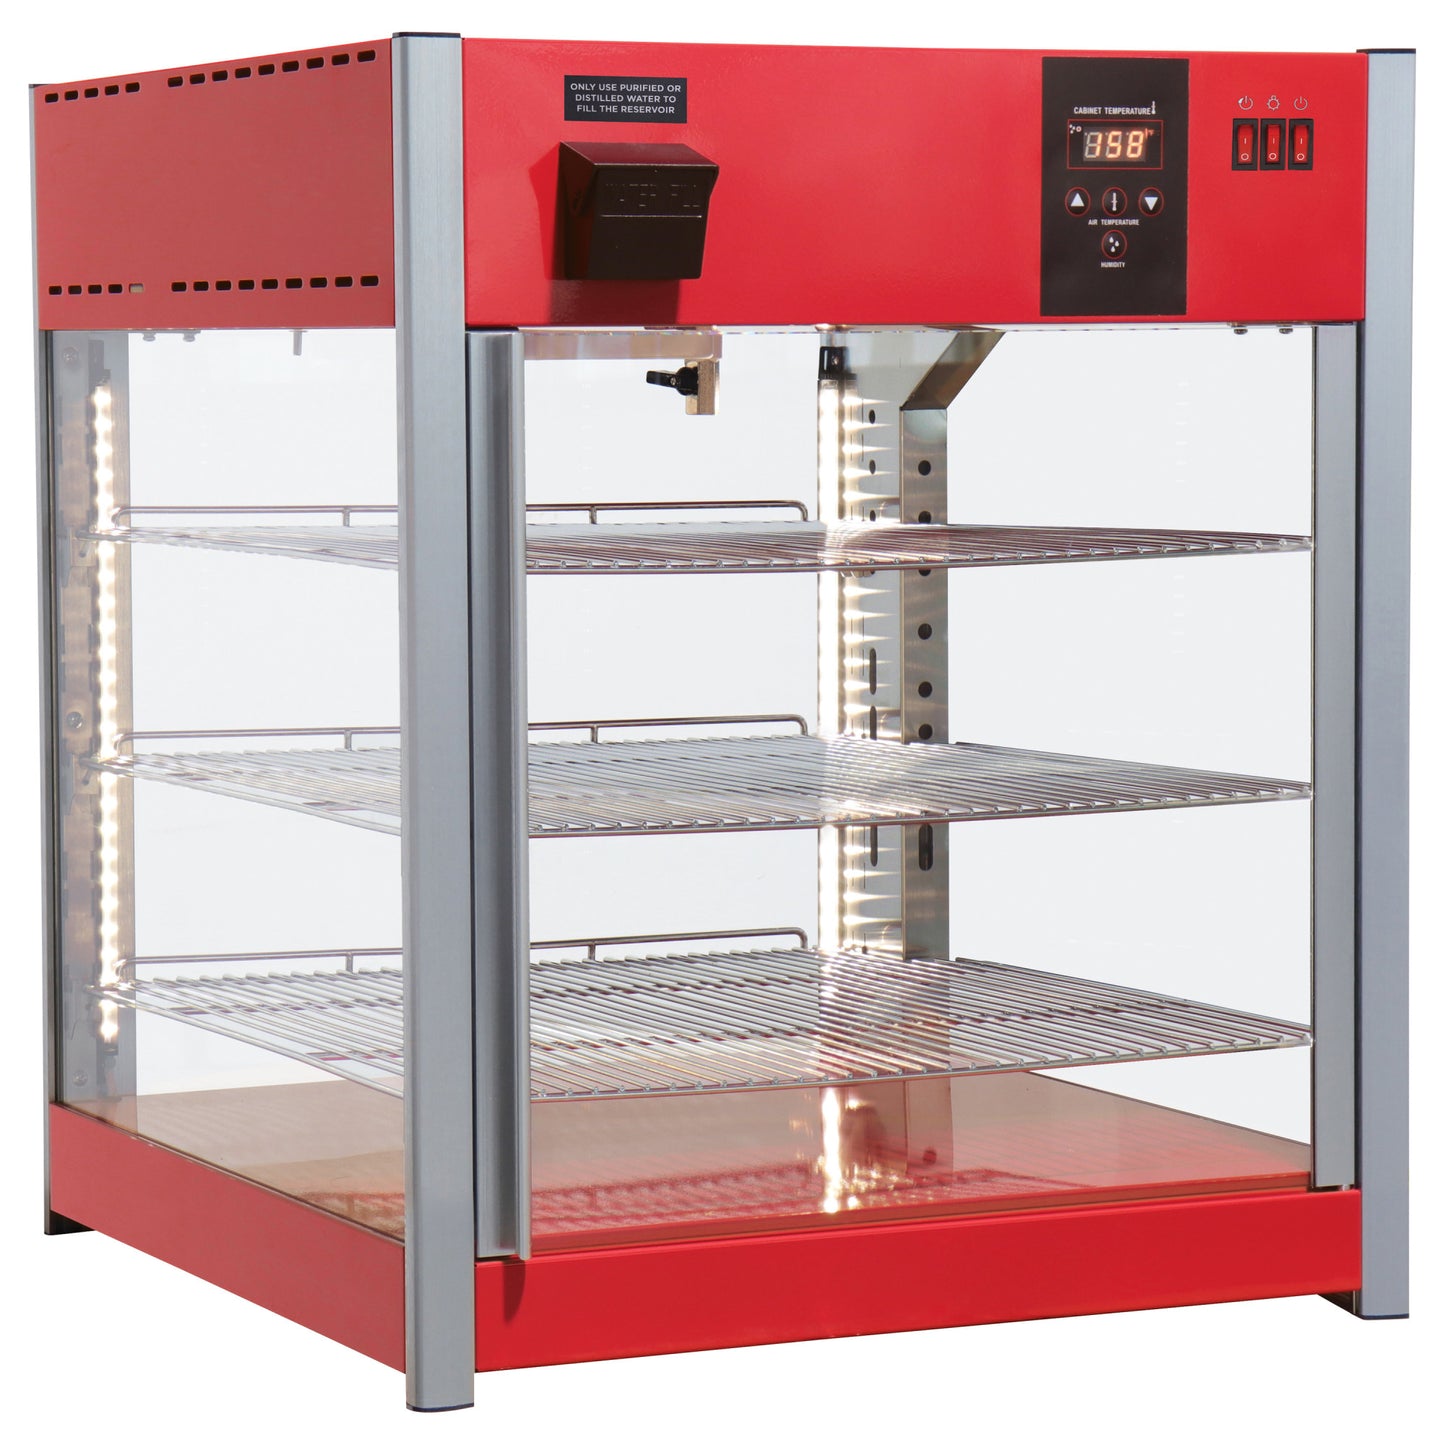 EDM-1PT - Electric Display Merchandiser, Red, Pass Through Warmer, 120V, 1500W